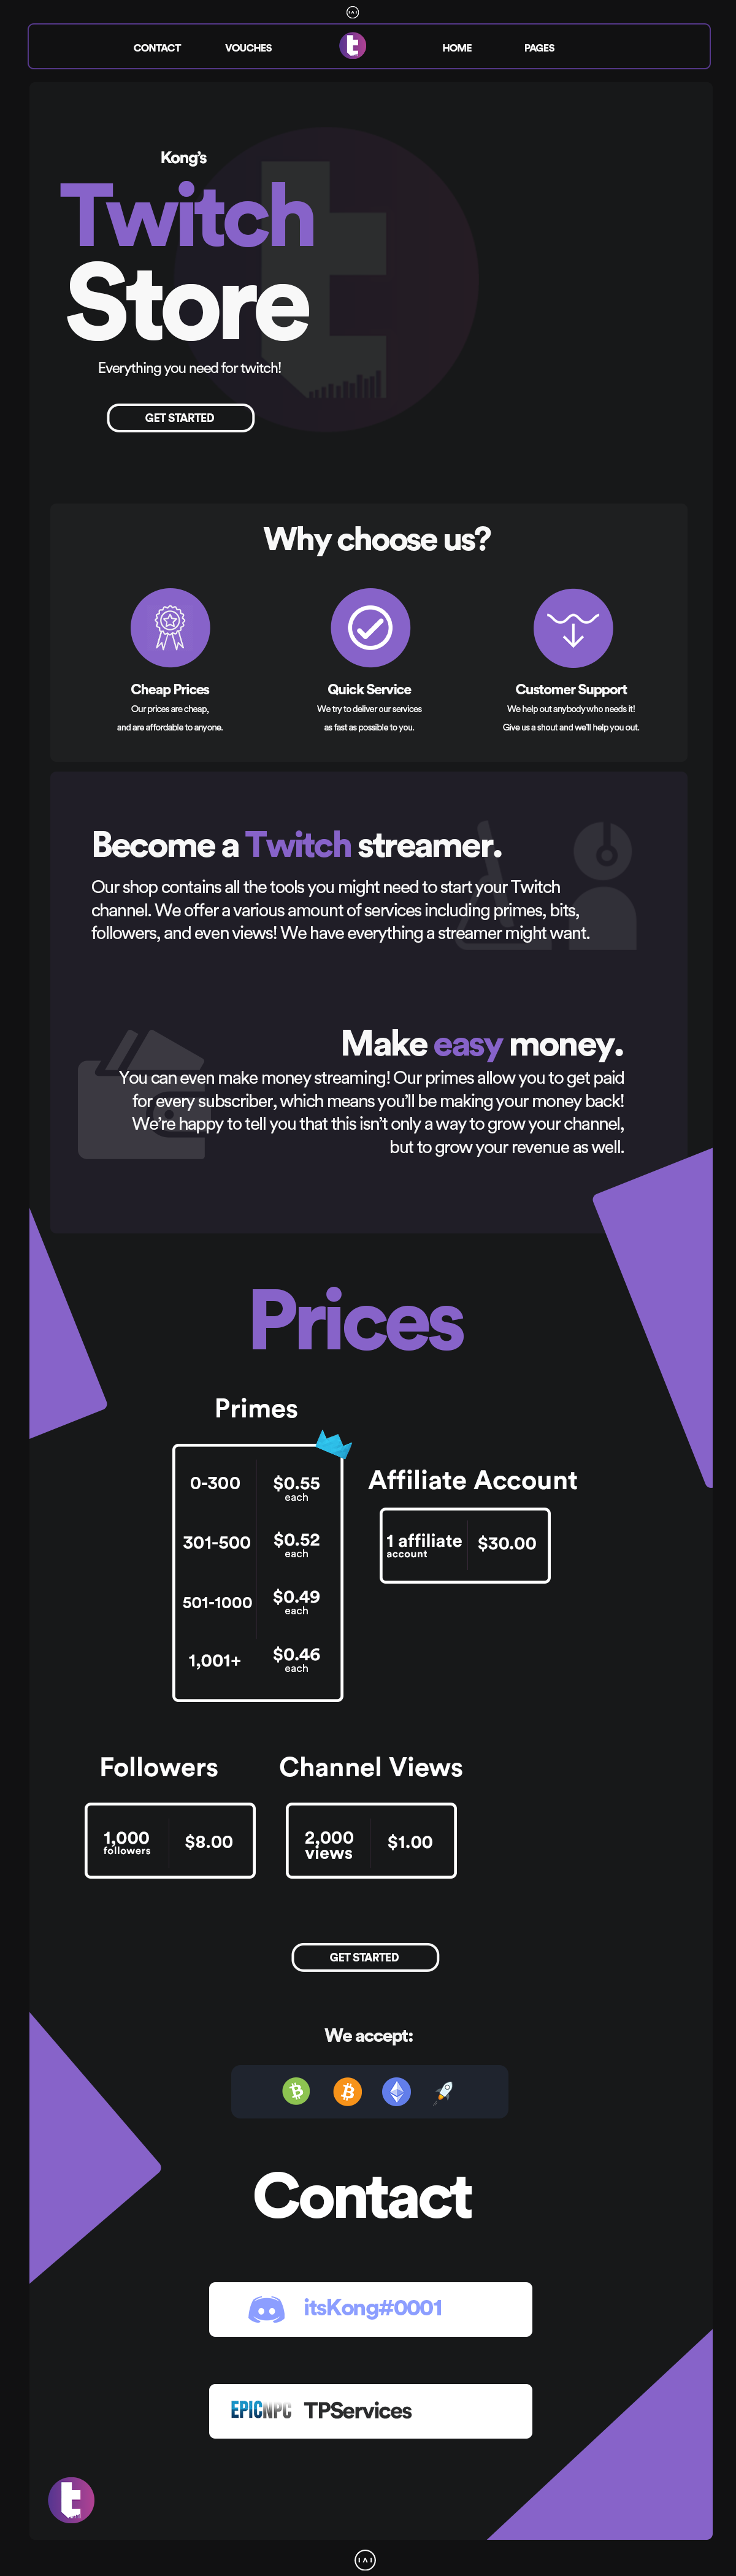 Twitch Profit Services™ Primes + Followers + Channel Views + MORE